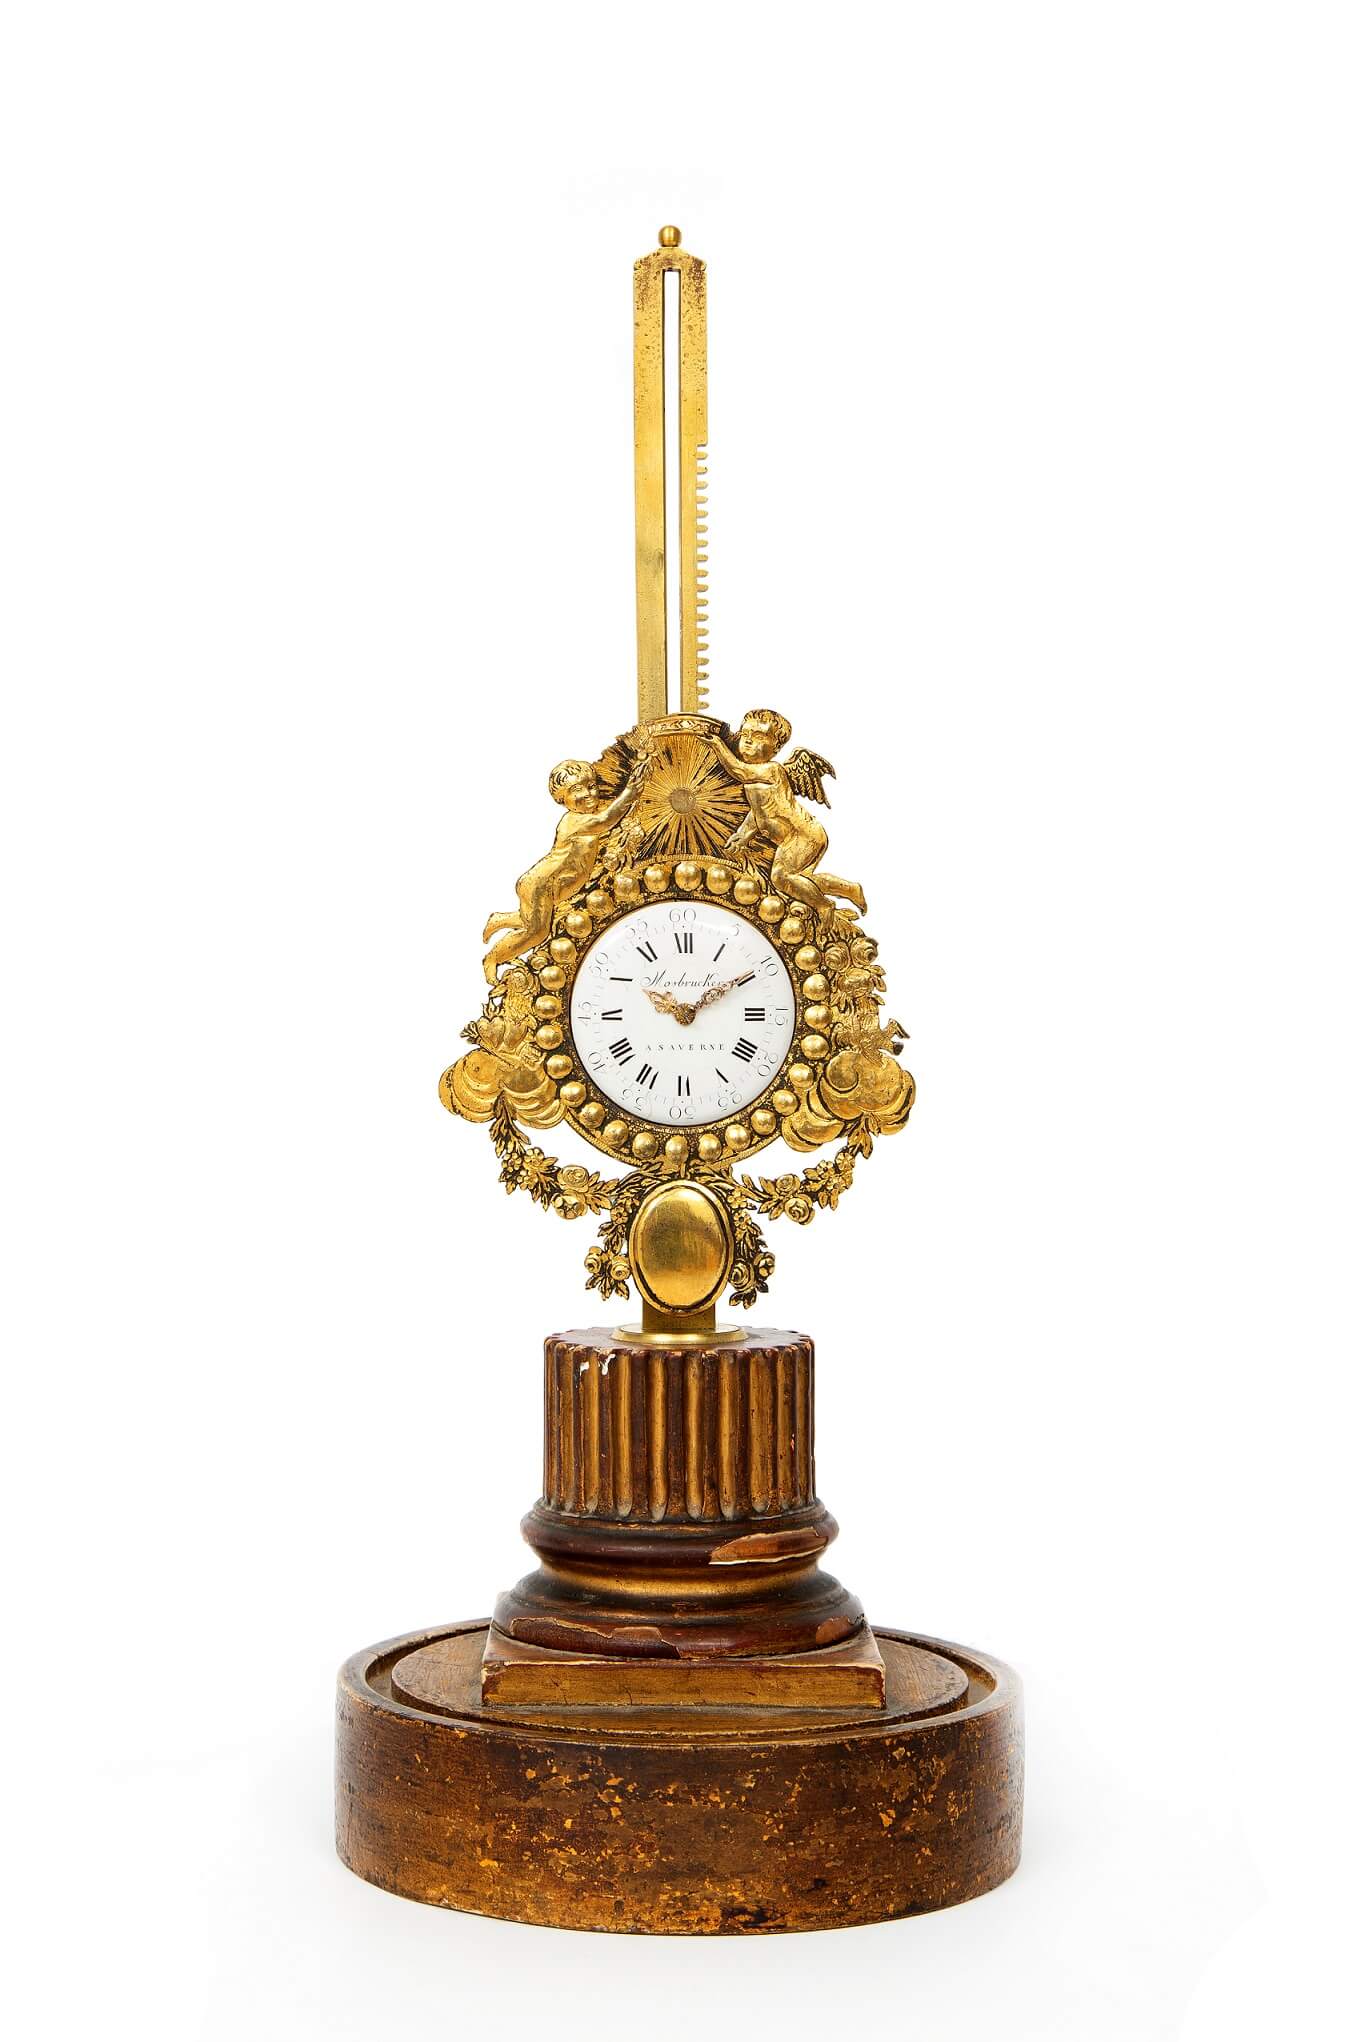 French-Louis XVI-rack-antique-clock-Mosbrucker-Saverne-miniature